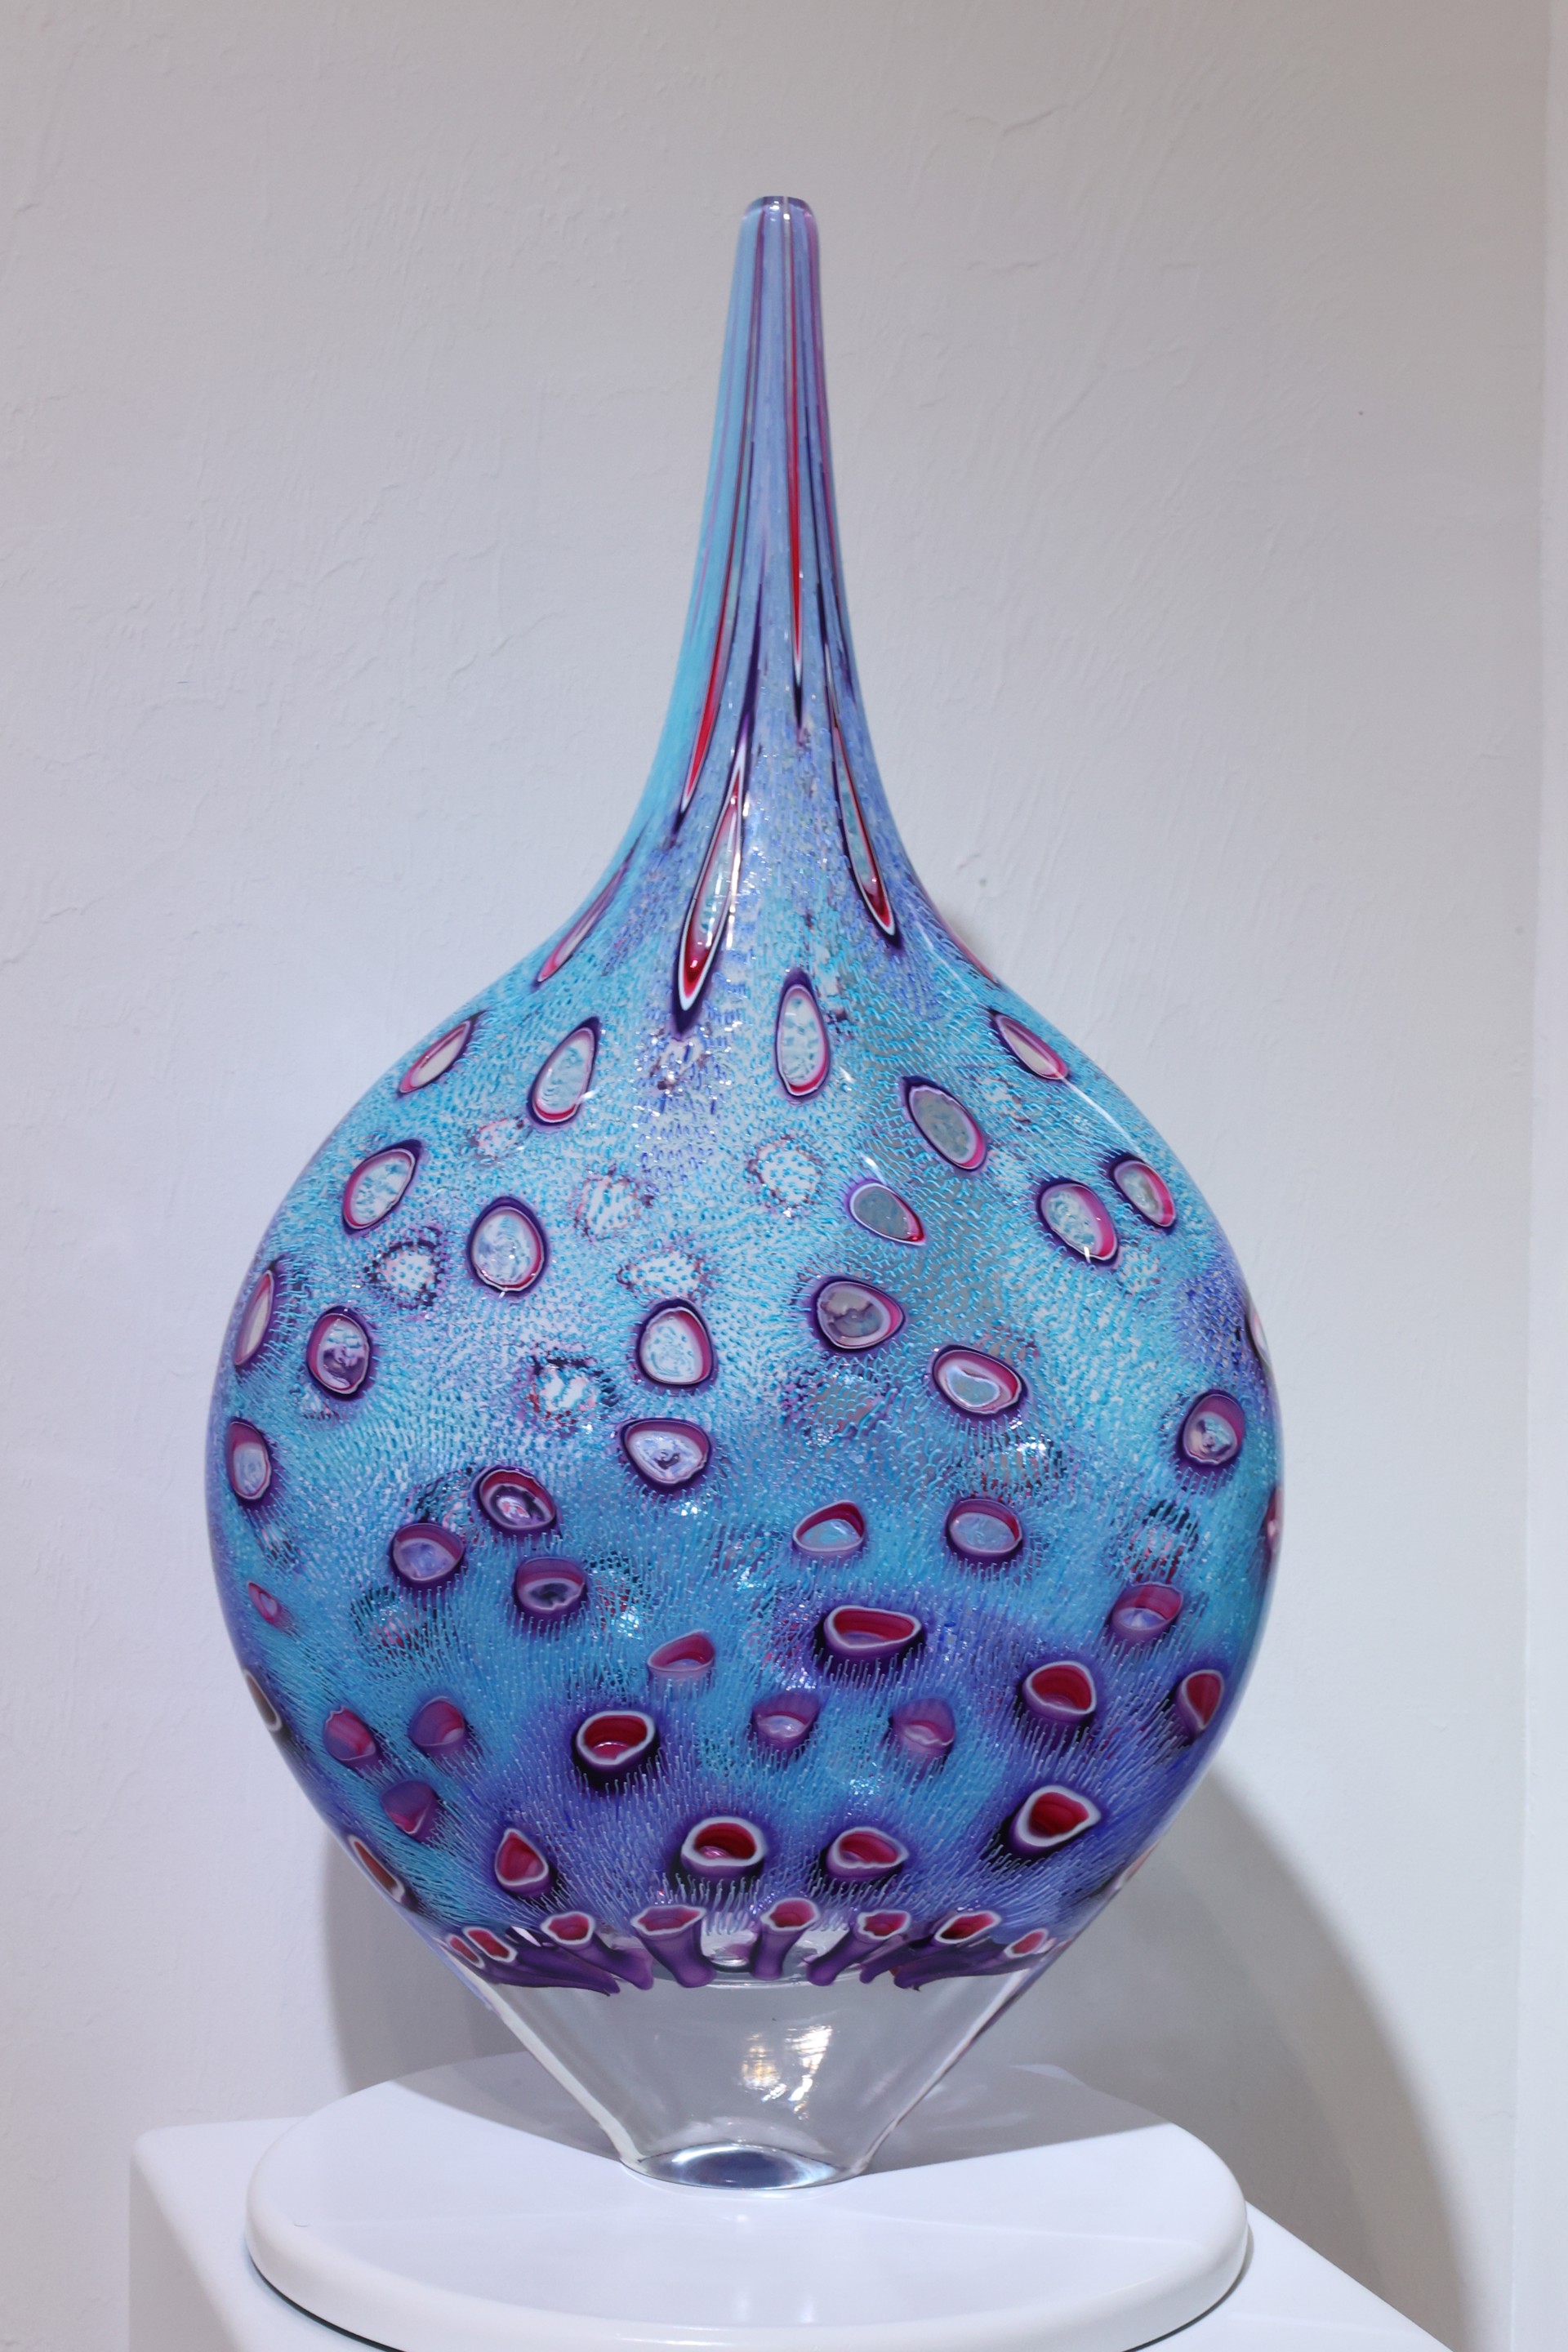 "Blue & Purple Vase" by Andrew Libecki